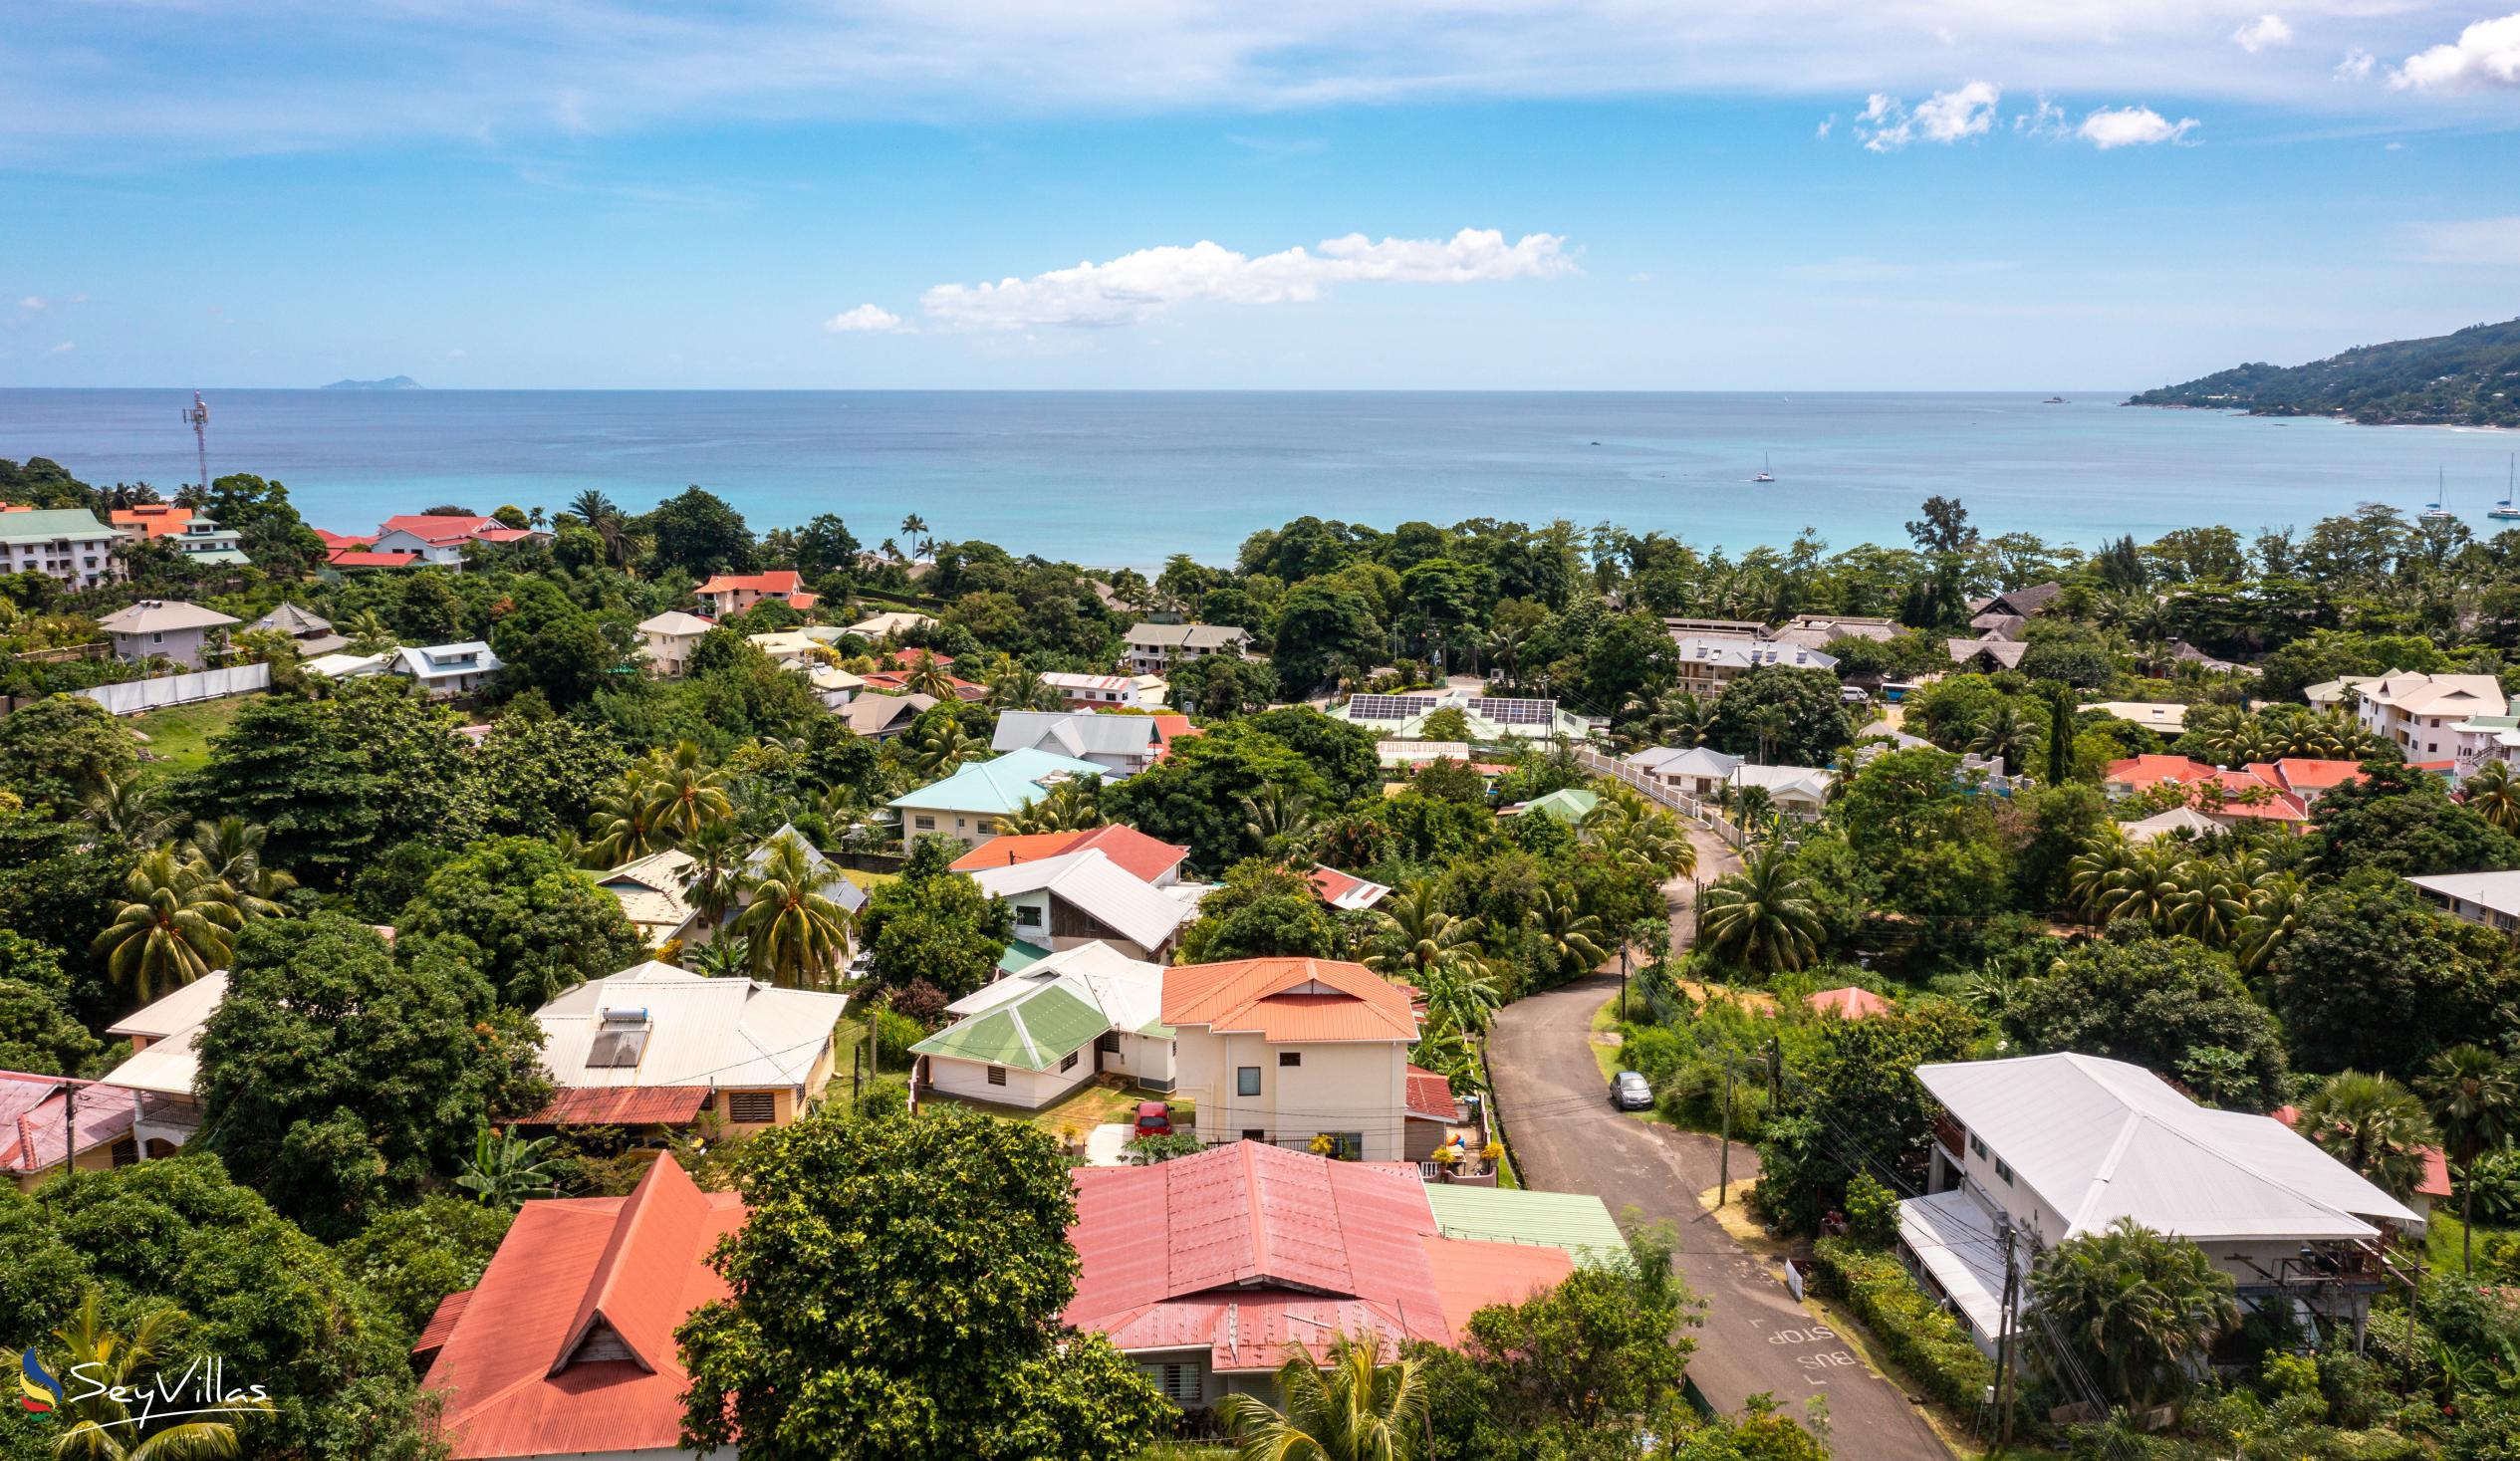 Foto 38: Villa Verde - Lage - Mahé (Seychellen)